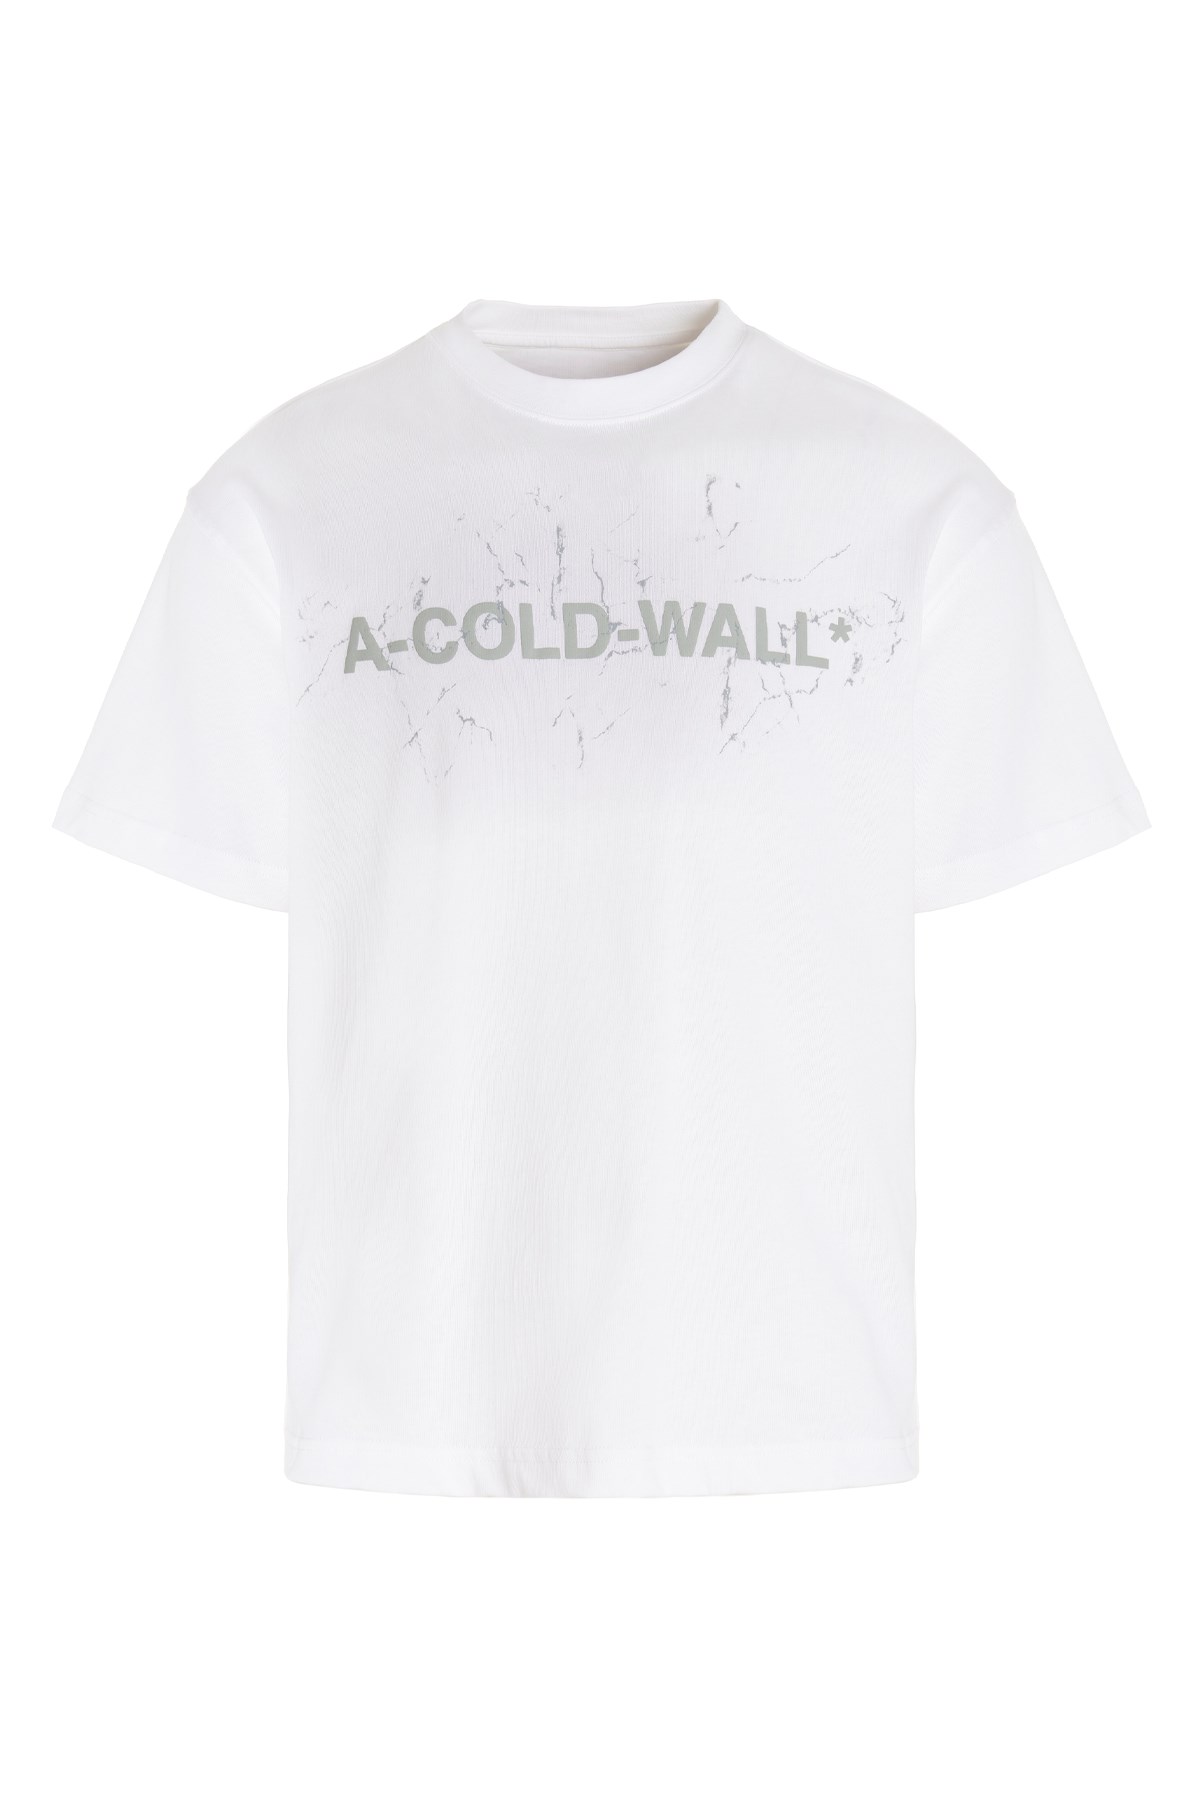 A-COLD-WALL* Ss Logo T-Shirt